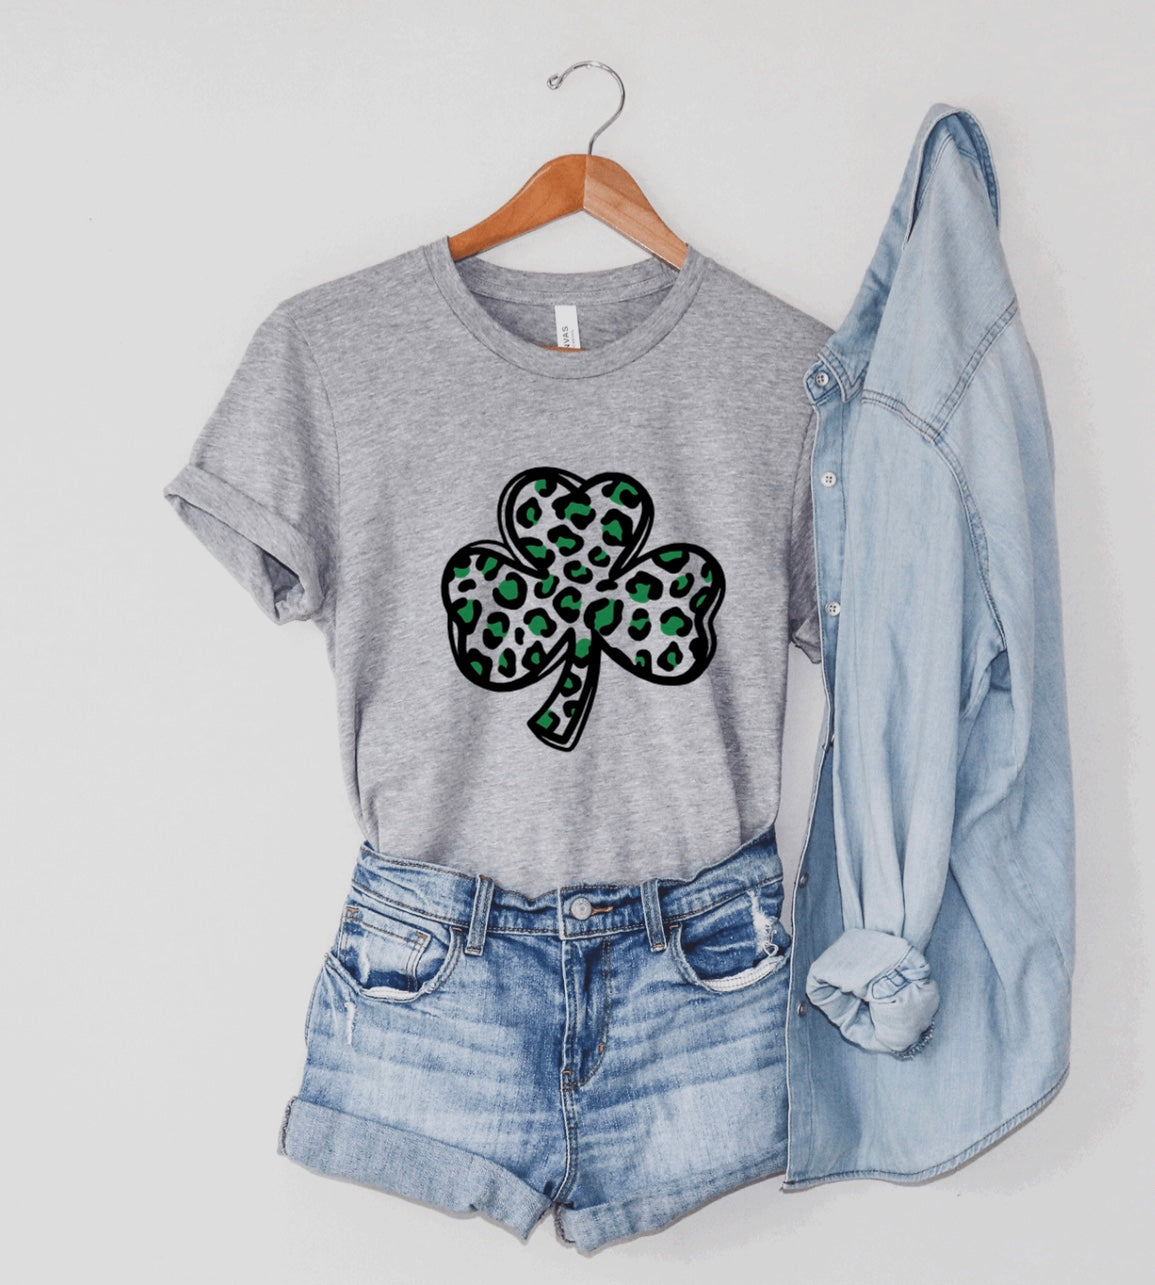 Leopard Print Shamrock- St. Patrick’s Day t-shirt